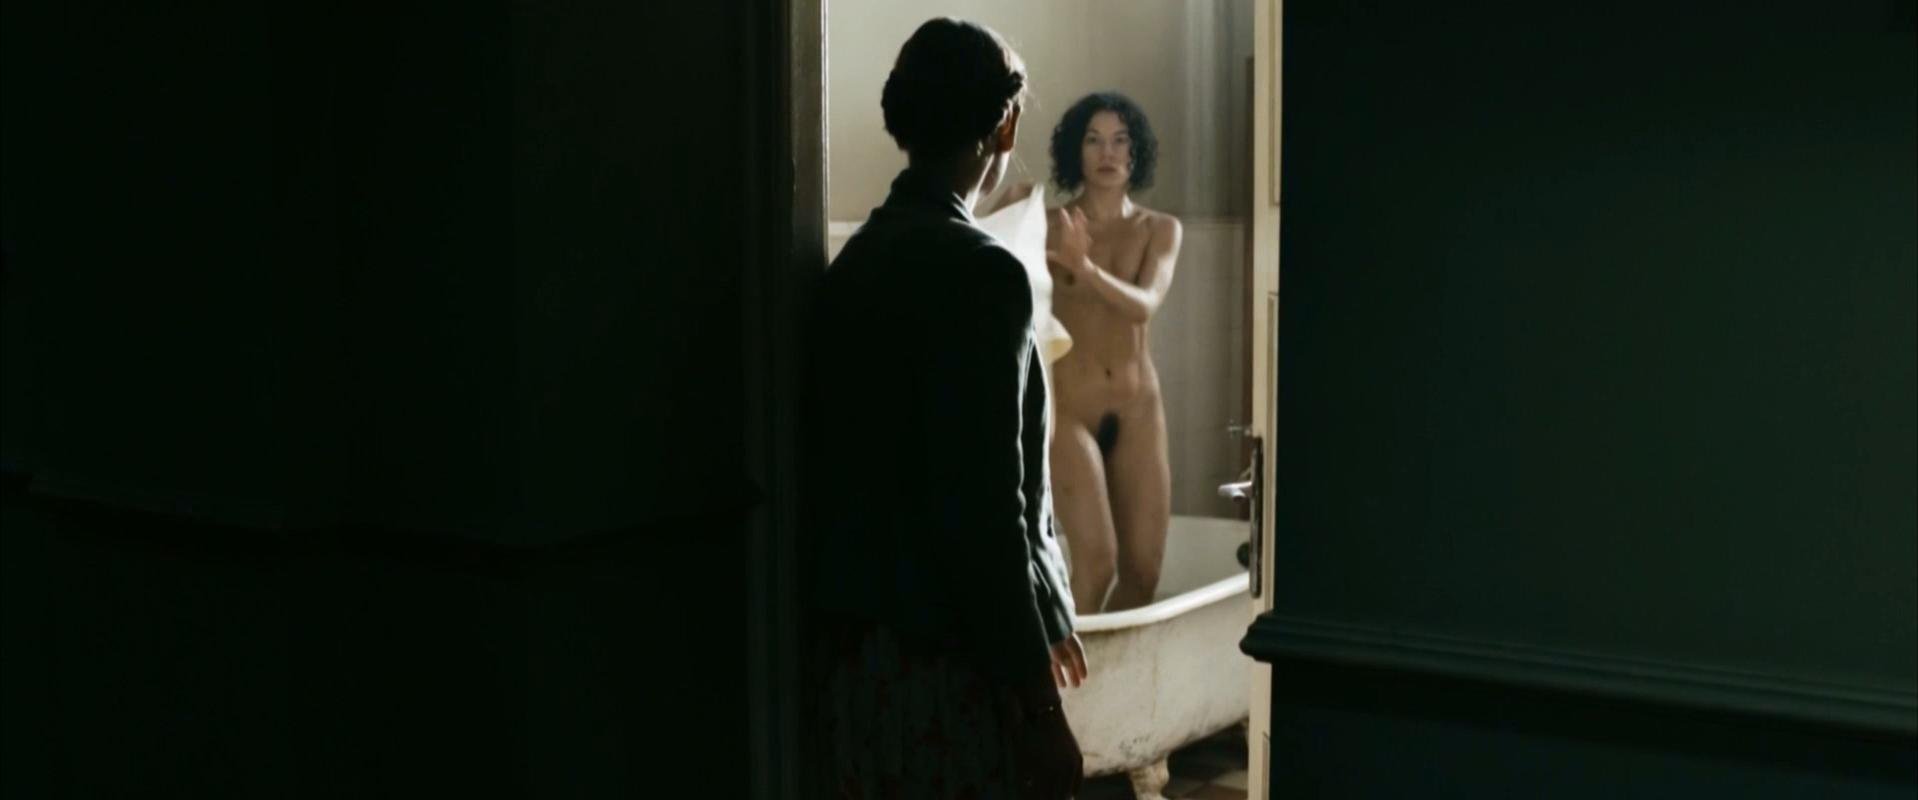 Nude Video Celebs Magdalena Boczarska Nude Julia Pogrebinska Nude W Ukryciu 2013 5223